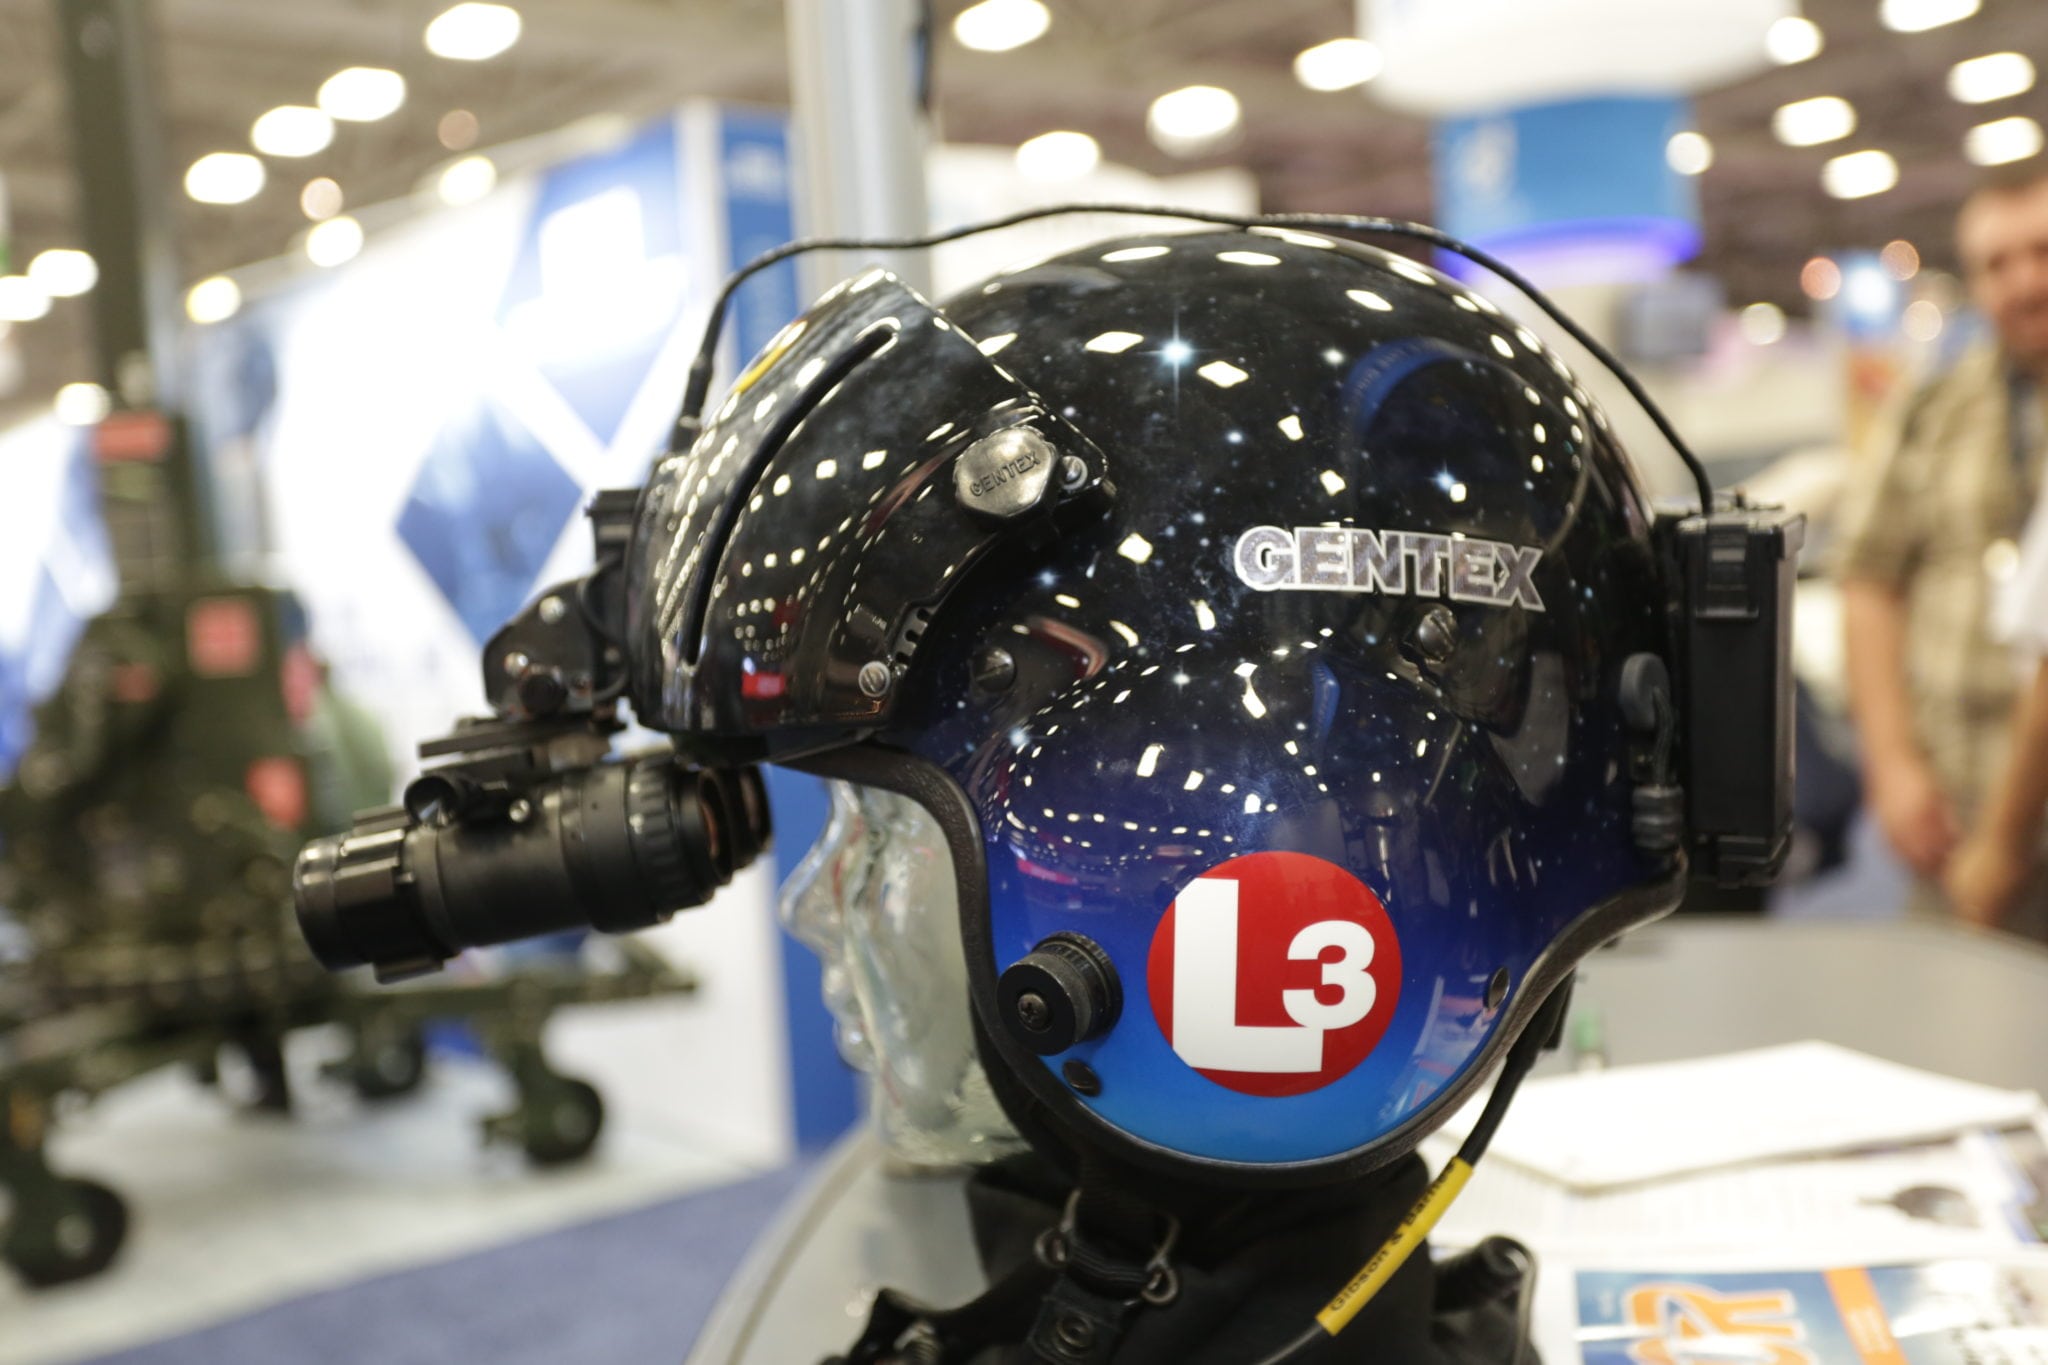 ASU's night vision helmet with L-3 logo.